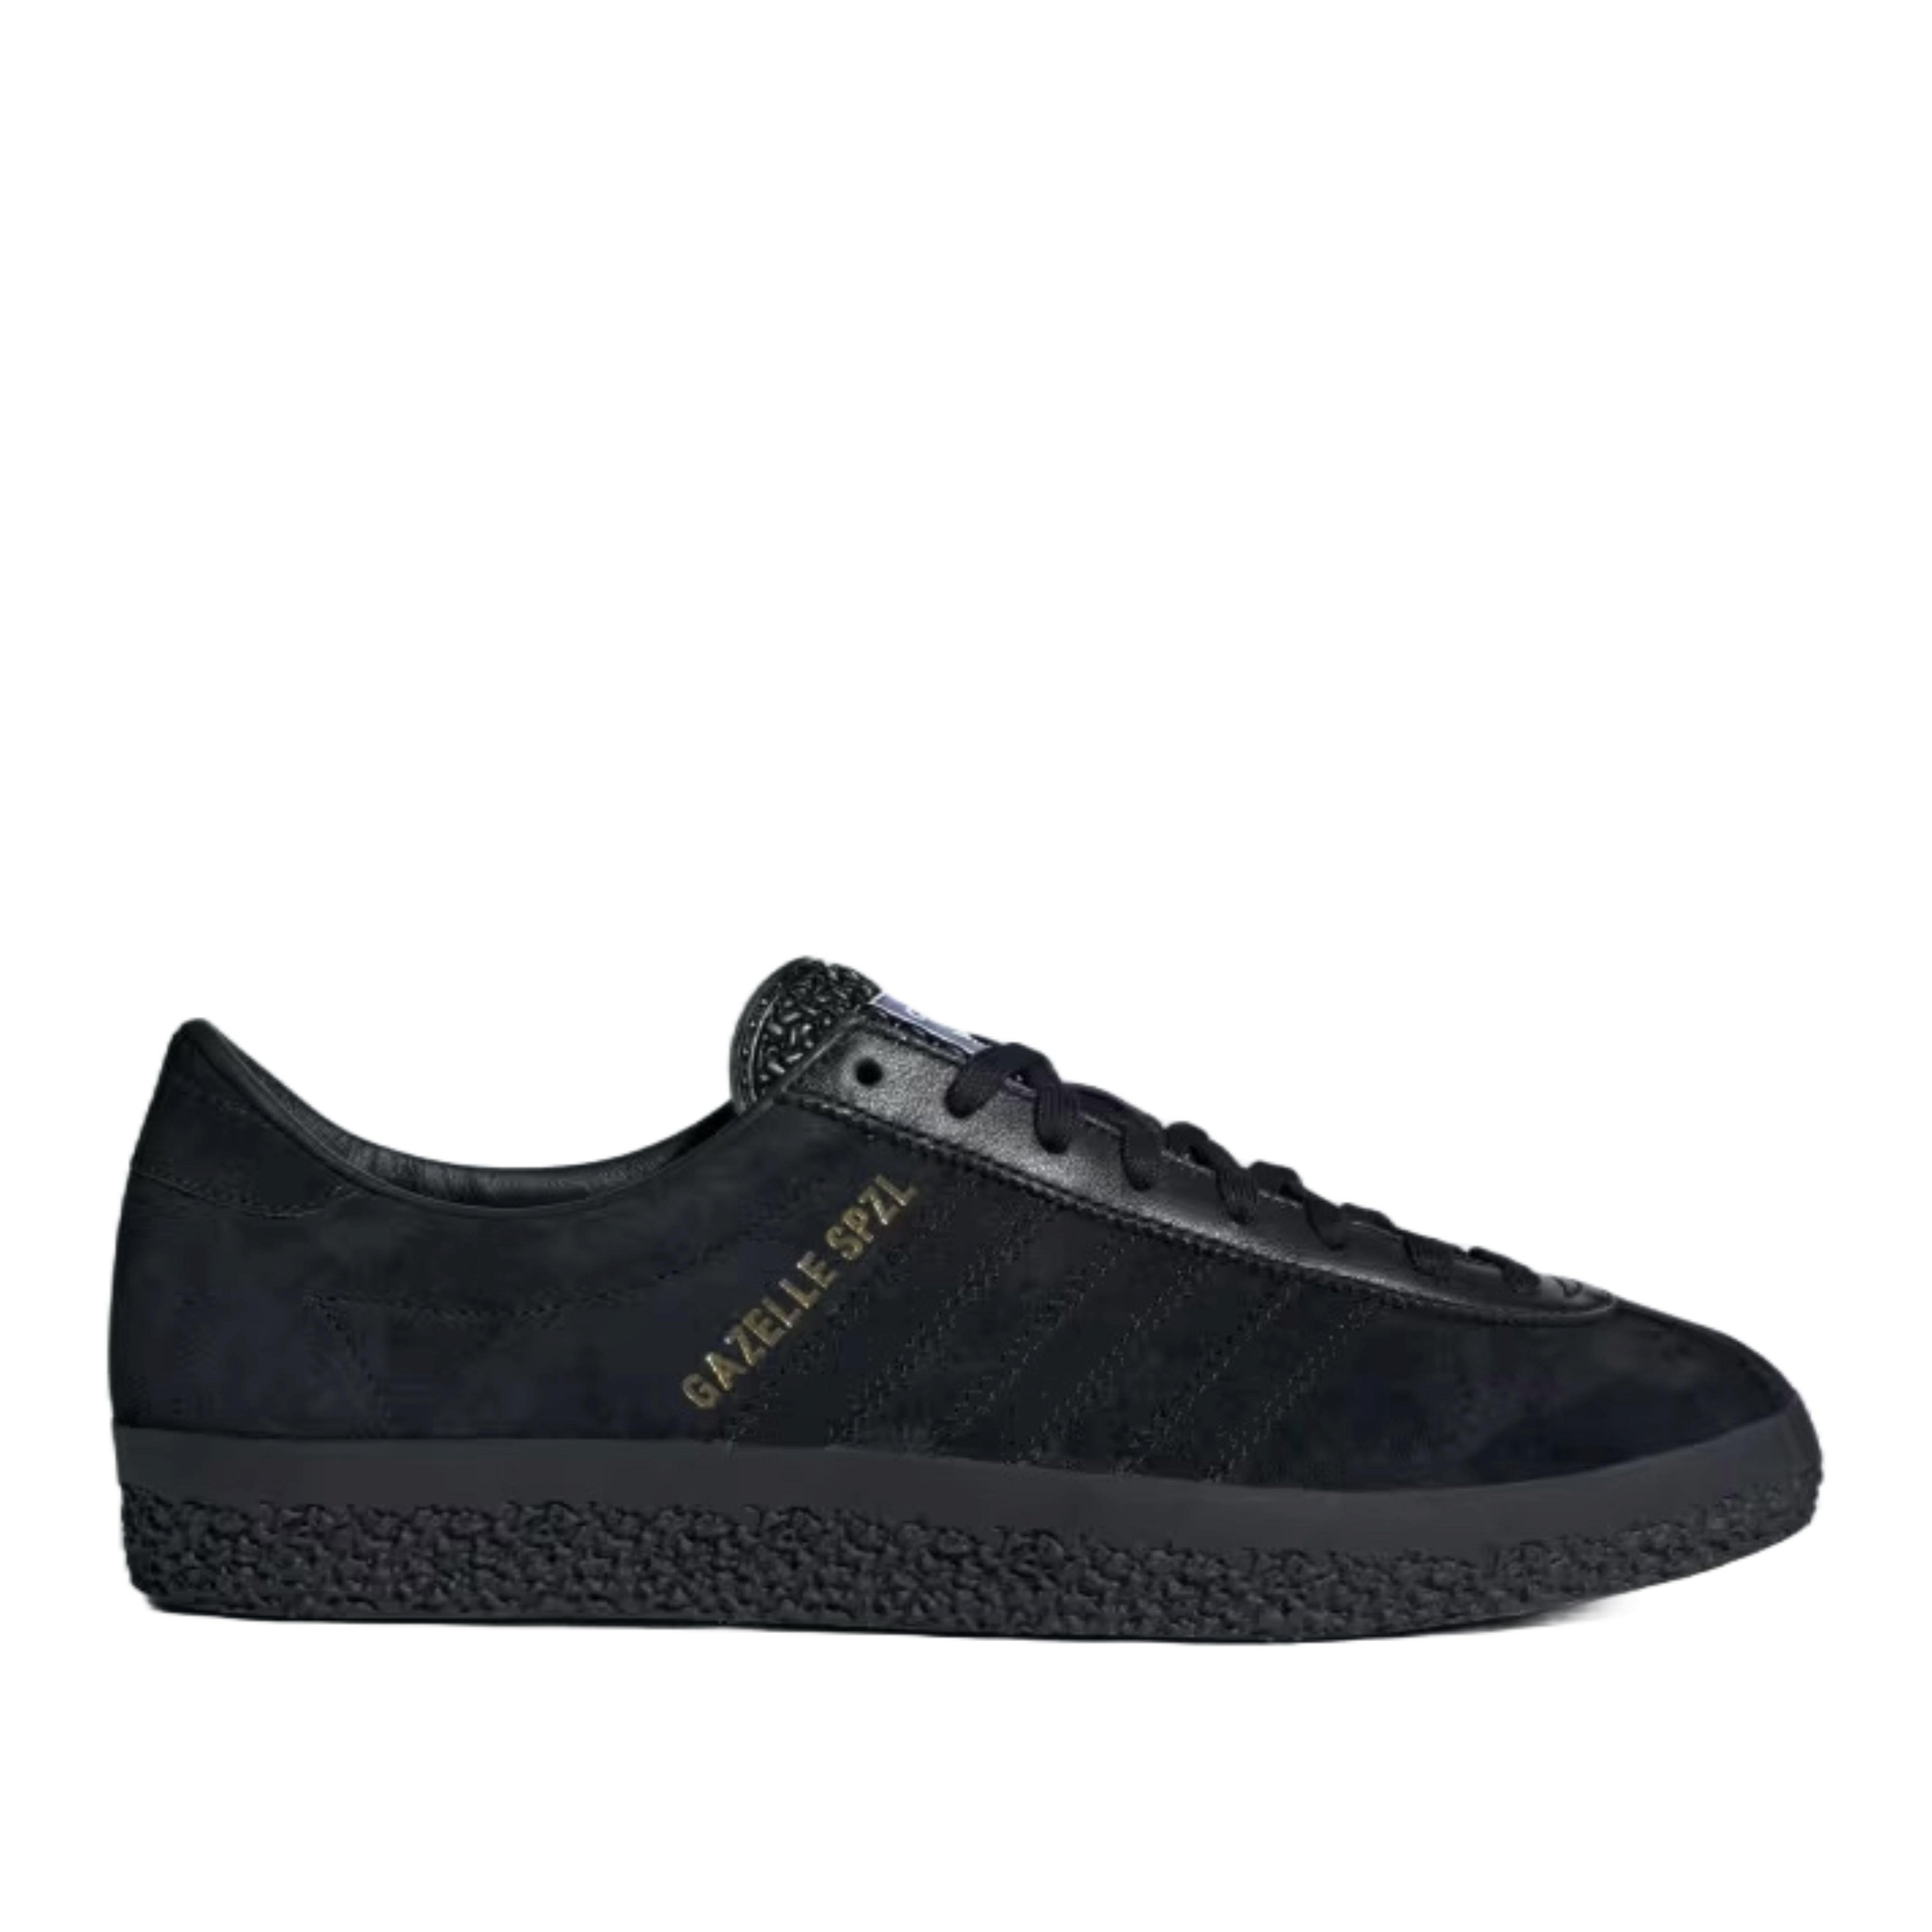 Adidas - Gazelle SPZL Shoes - (Core Black / Core Black / Core Black) by ADIDAS